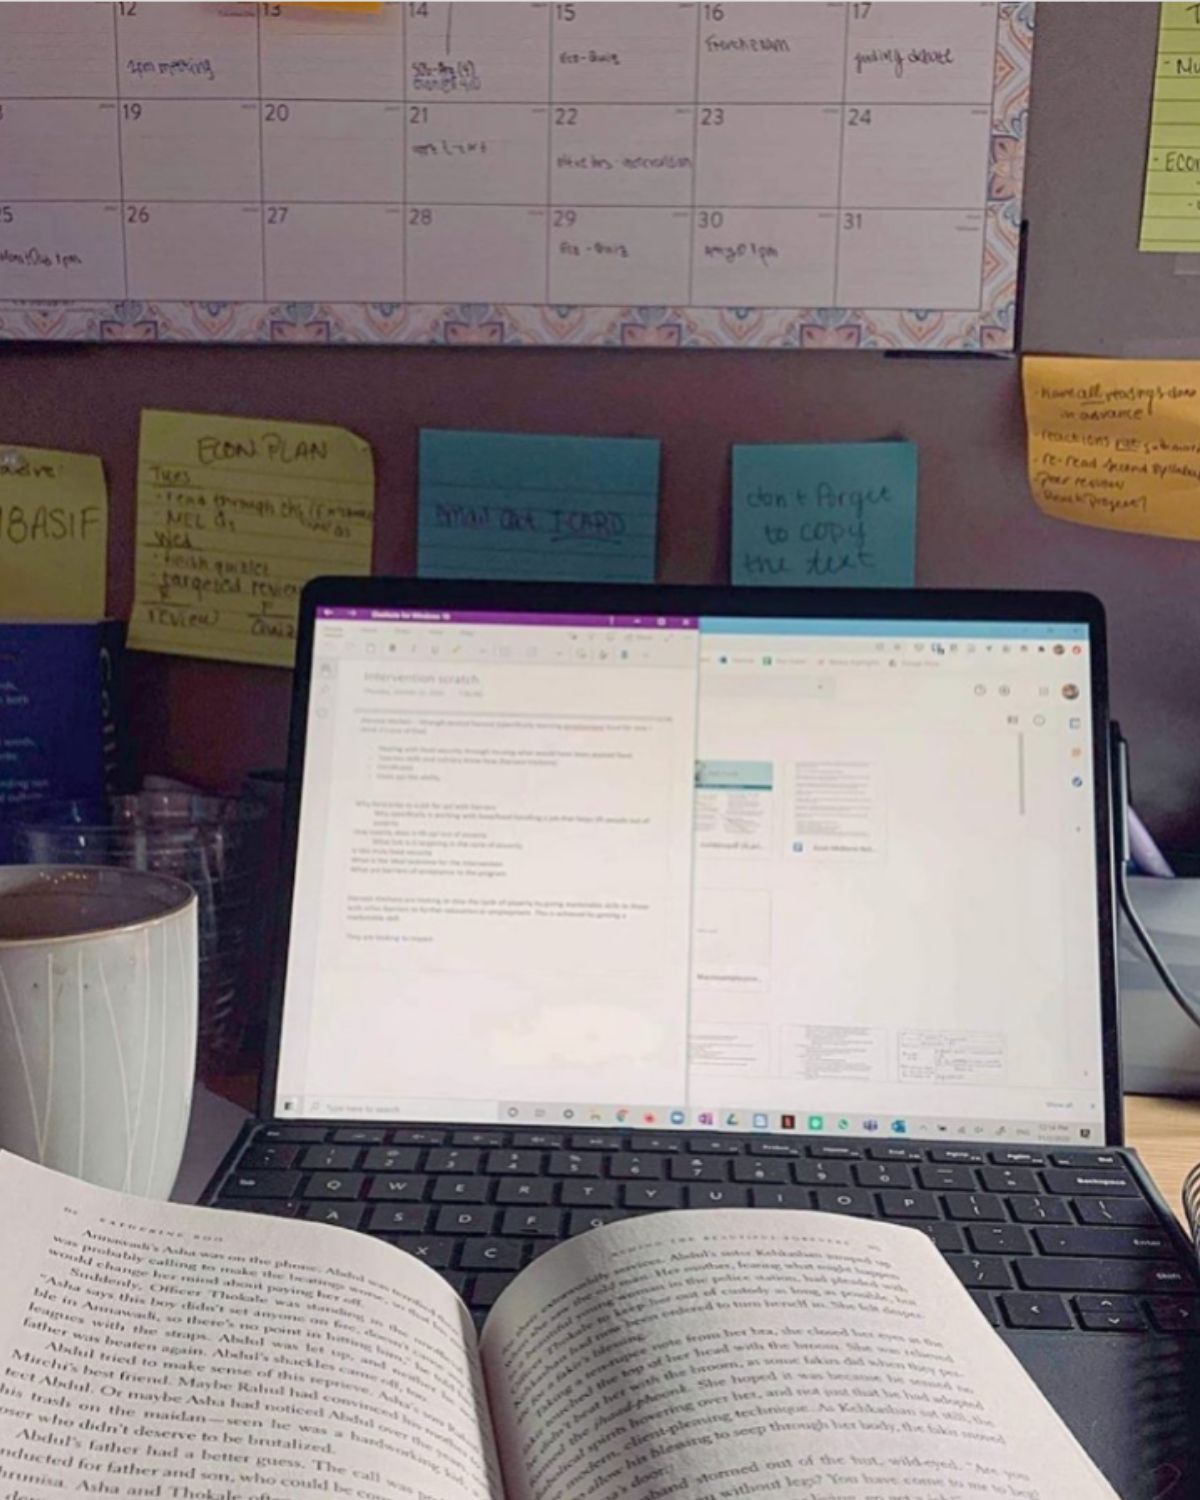 A laptop and a calendar behind a textbook on a desk.